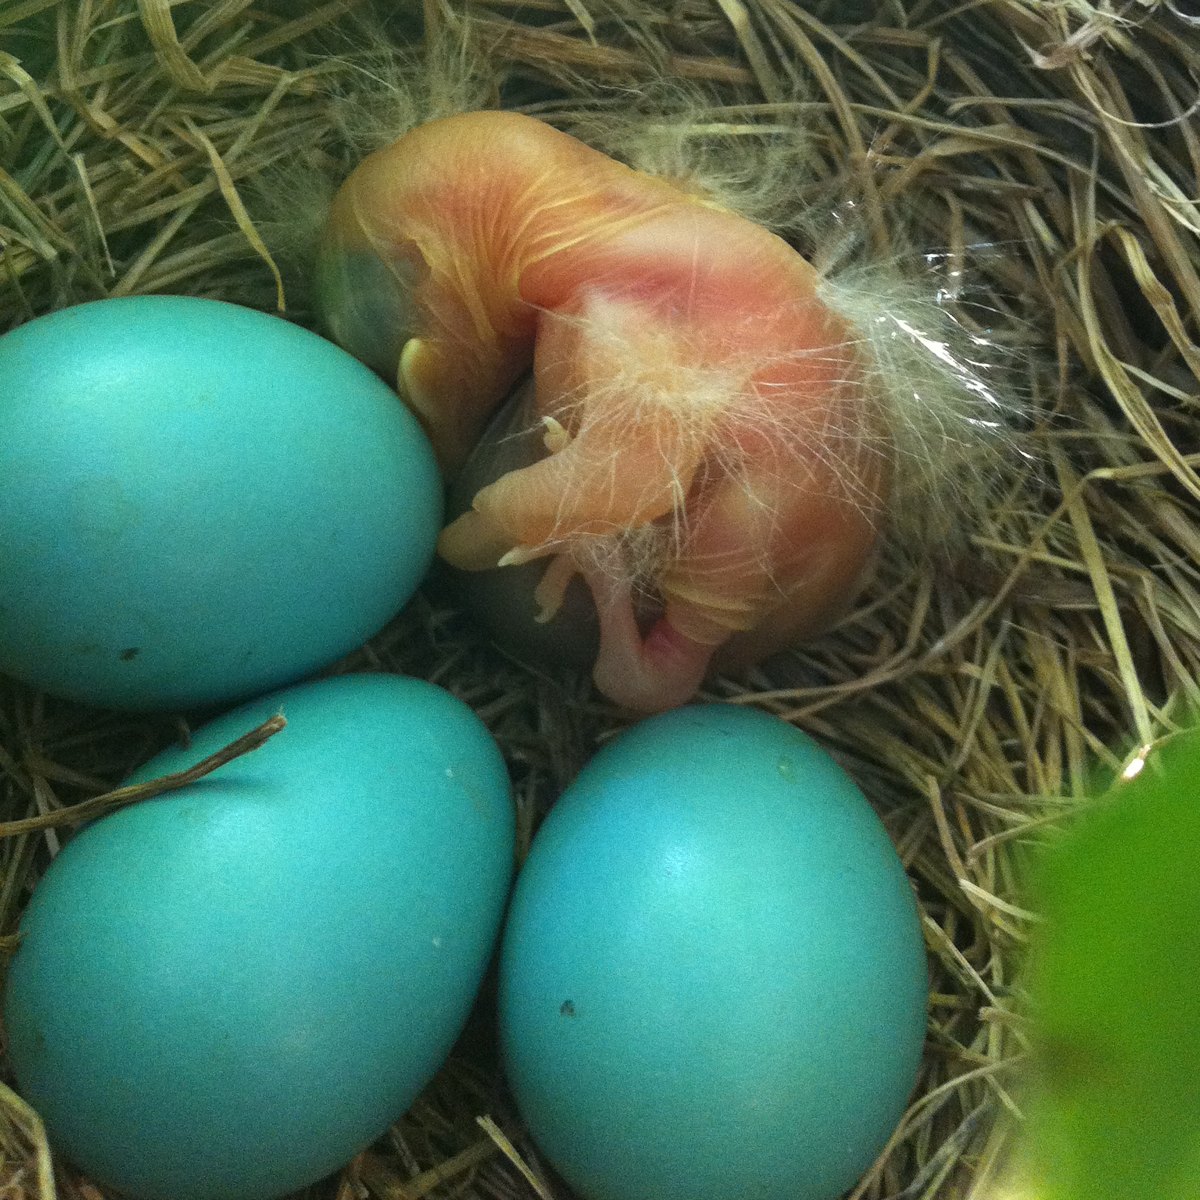 Newborn American Robin in Nest with eggs